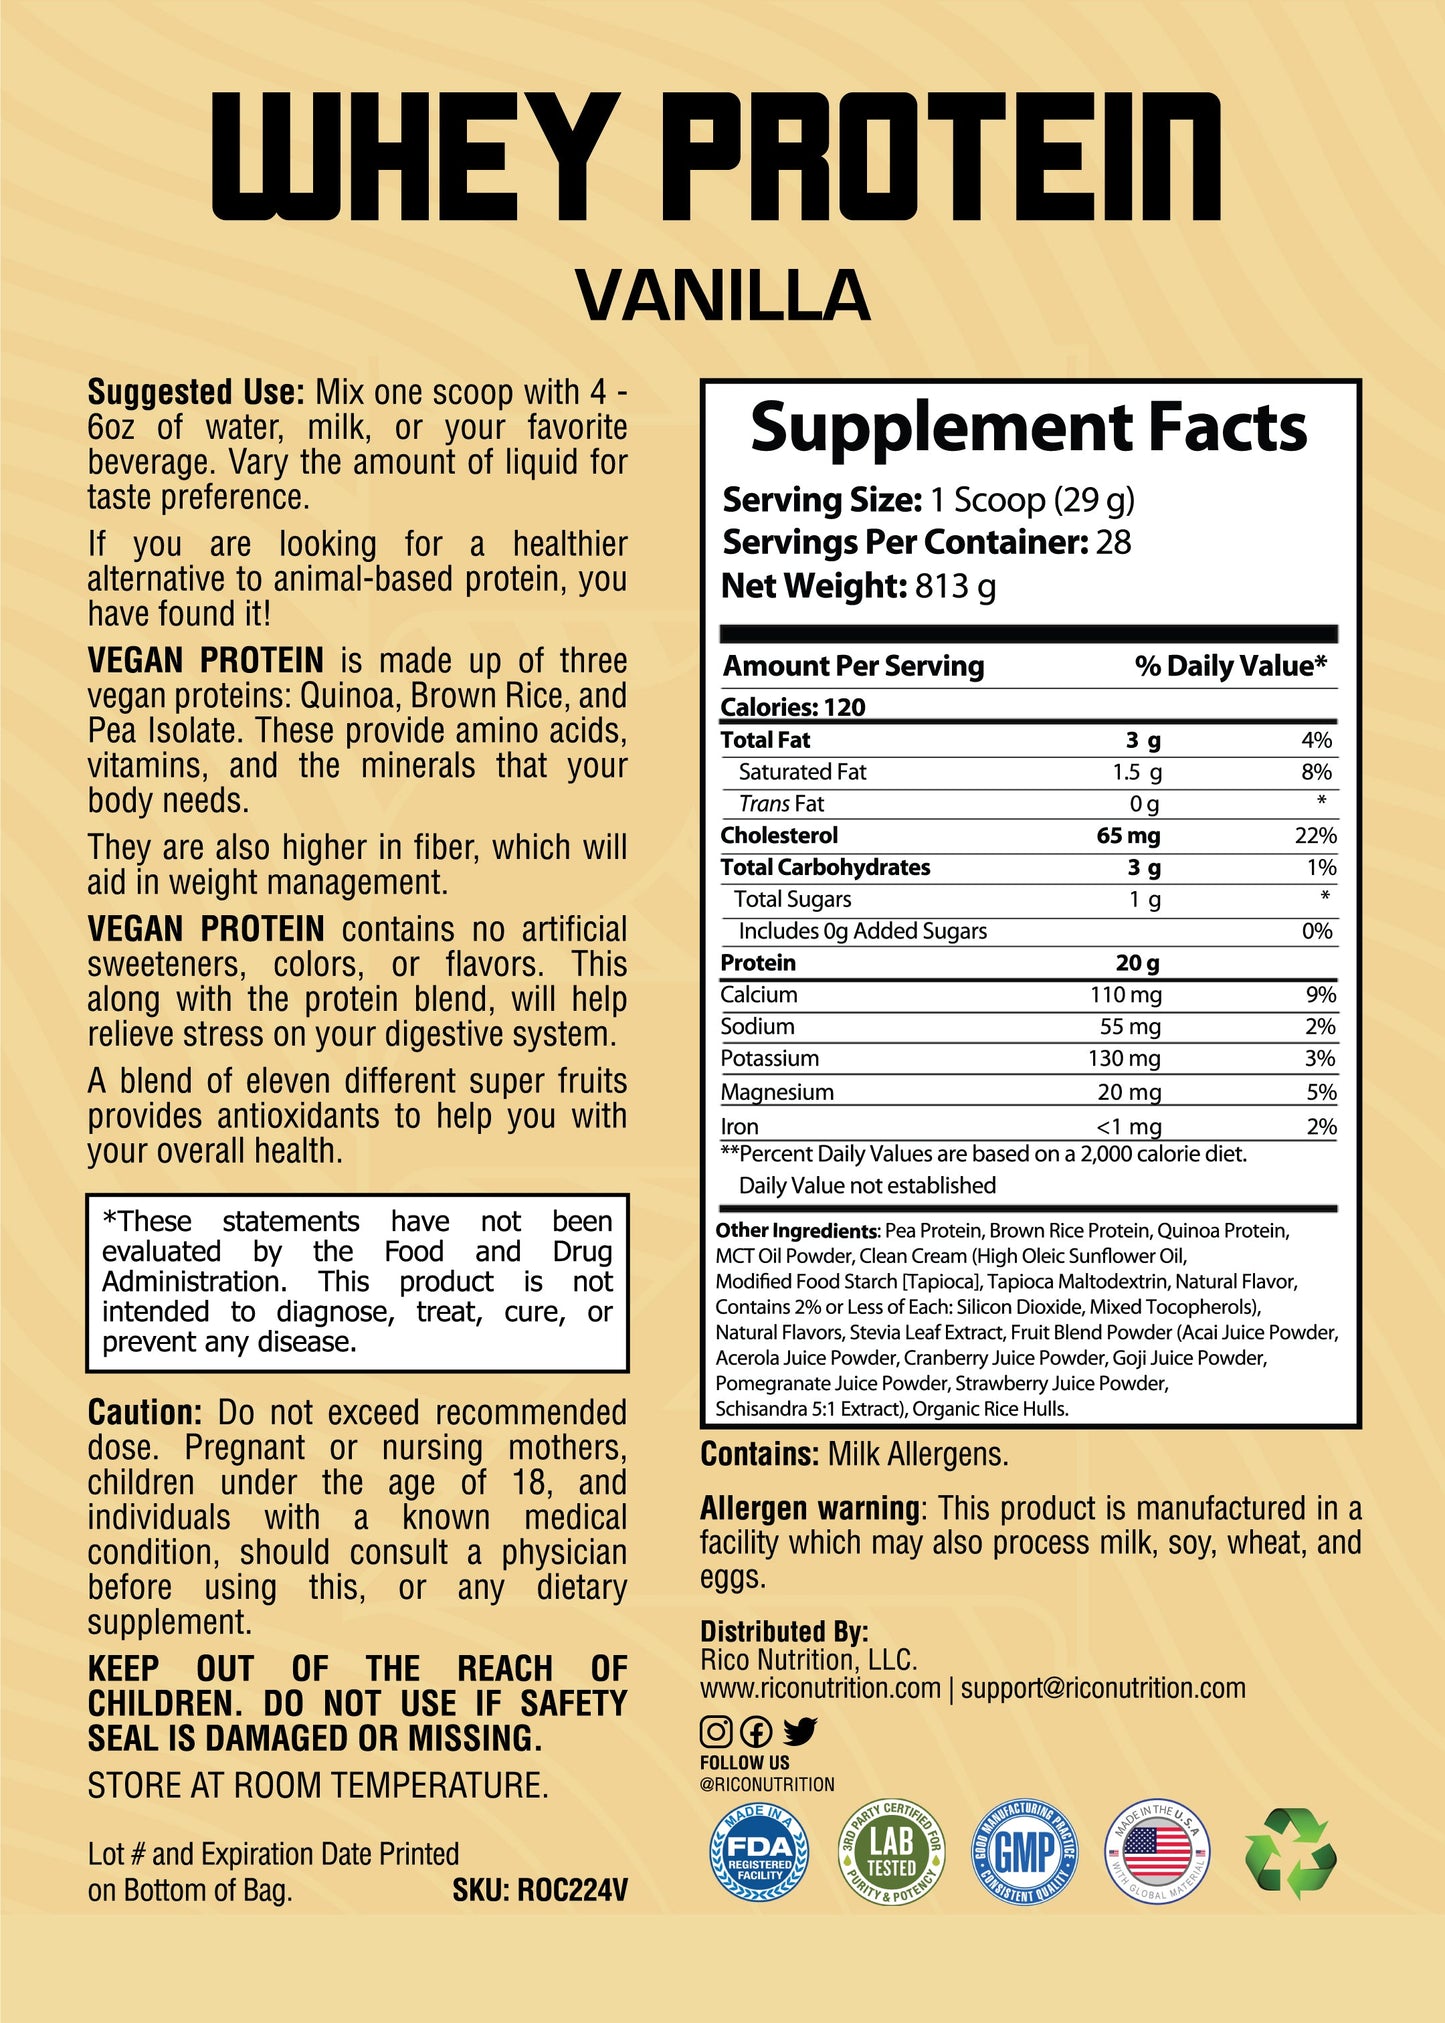 2lb Vegan Protein Vanilla – 28 Servings - Rico Goods by Rico Suarez